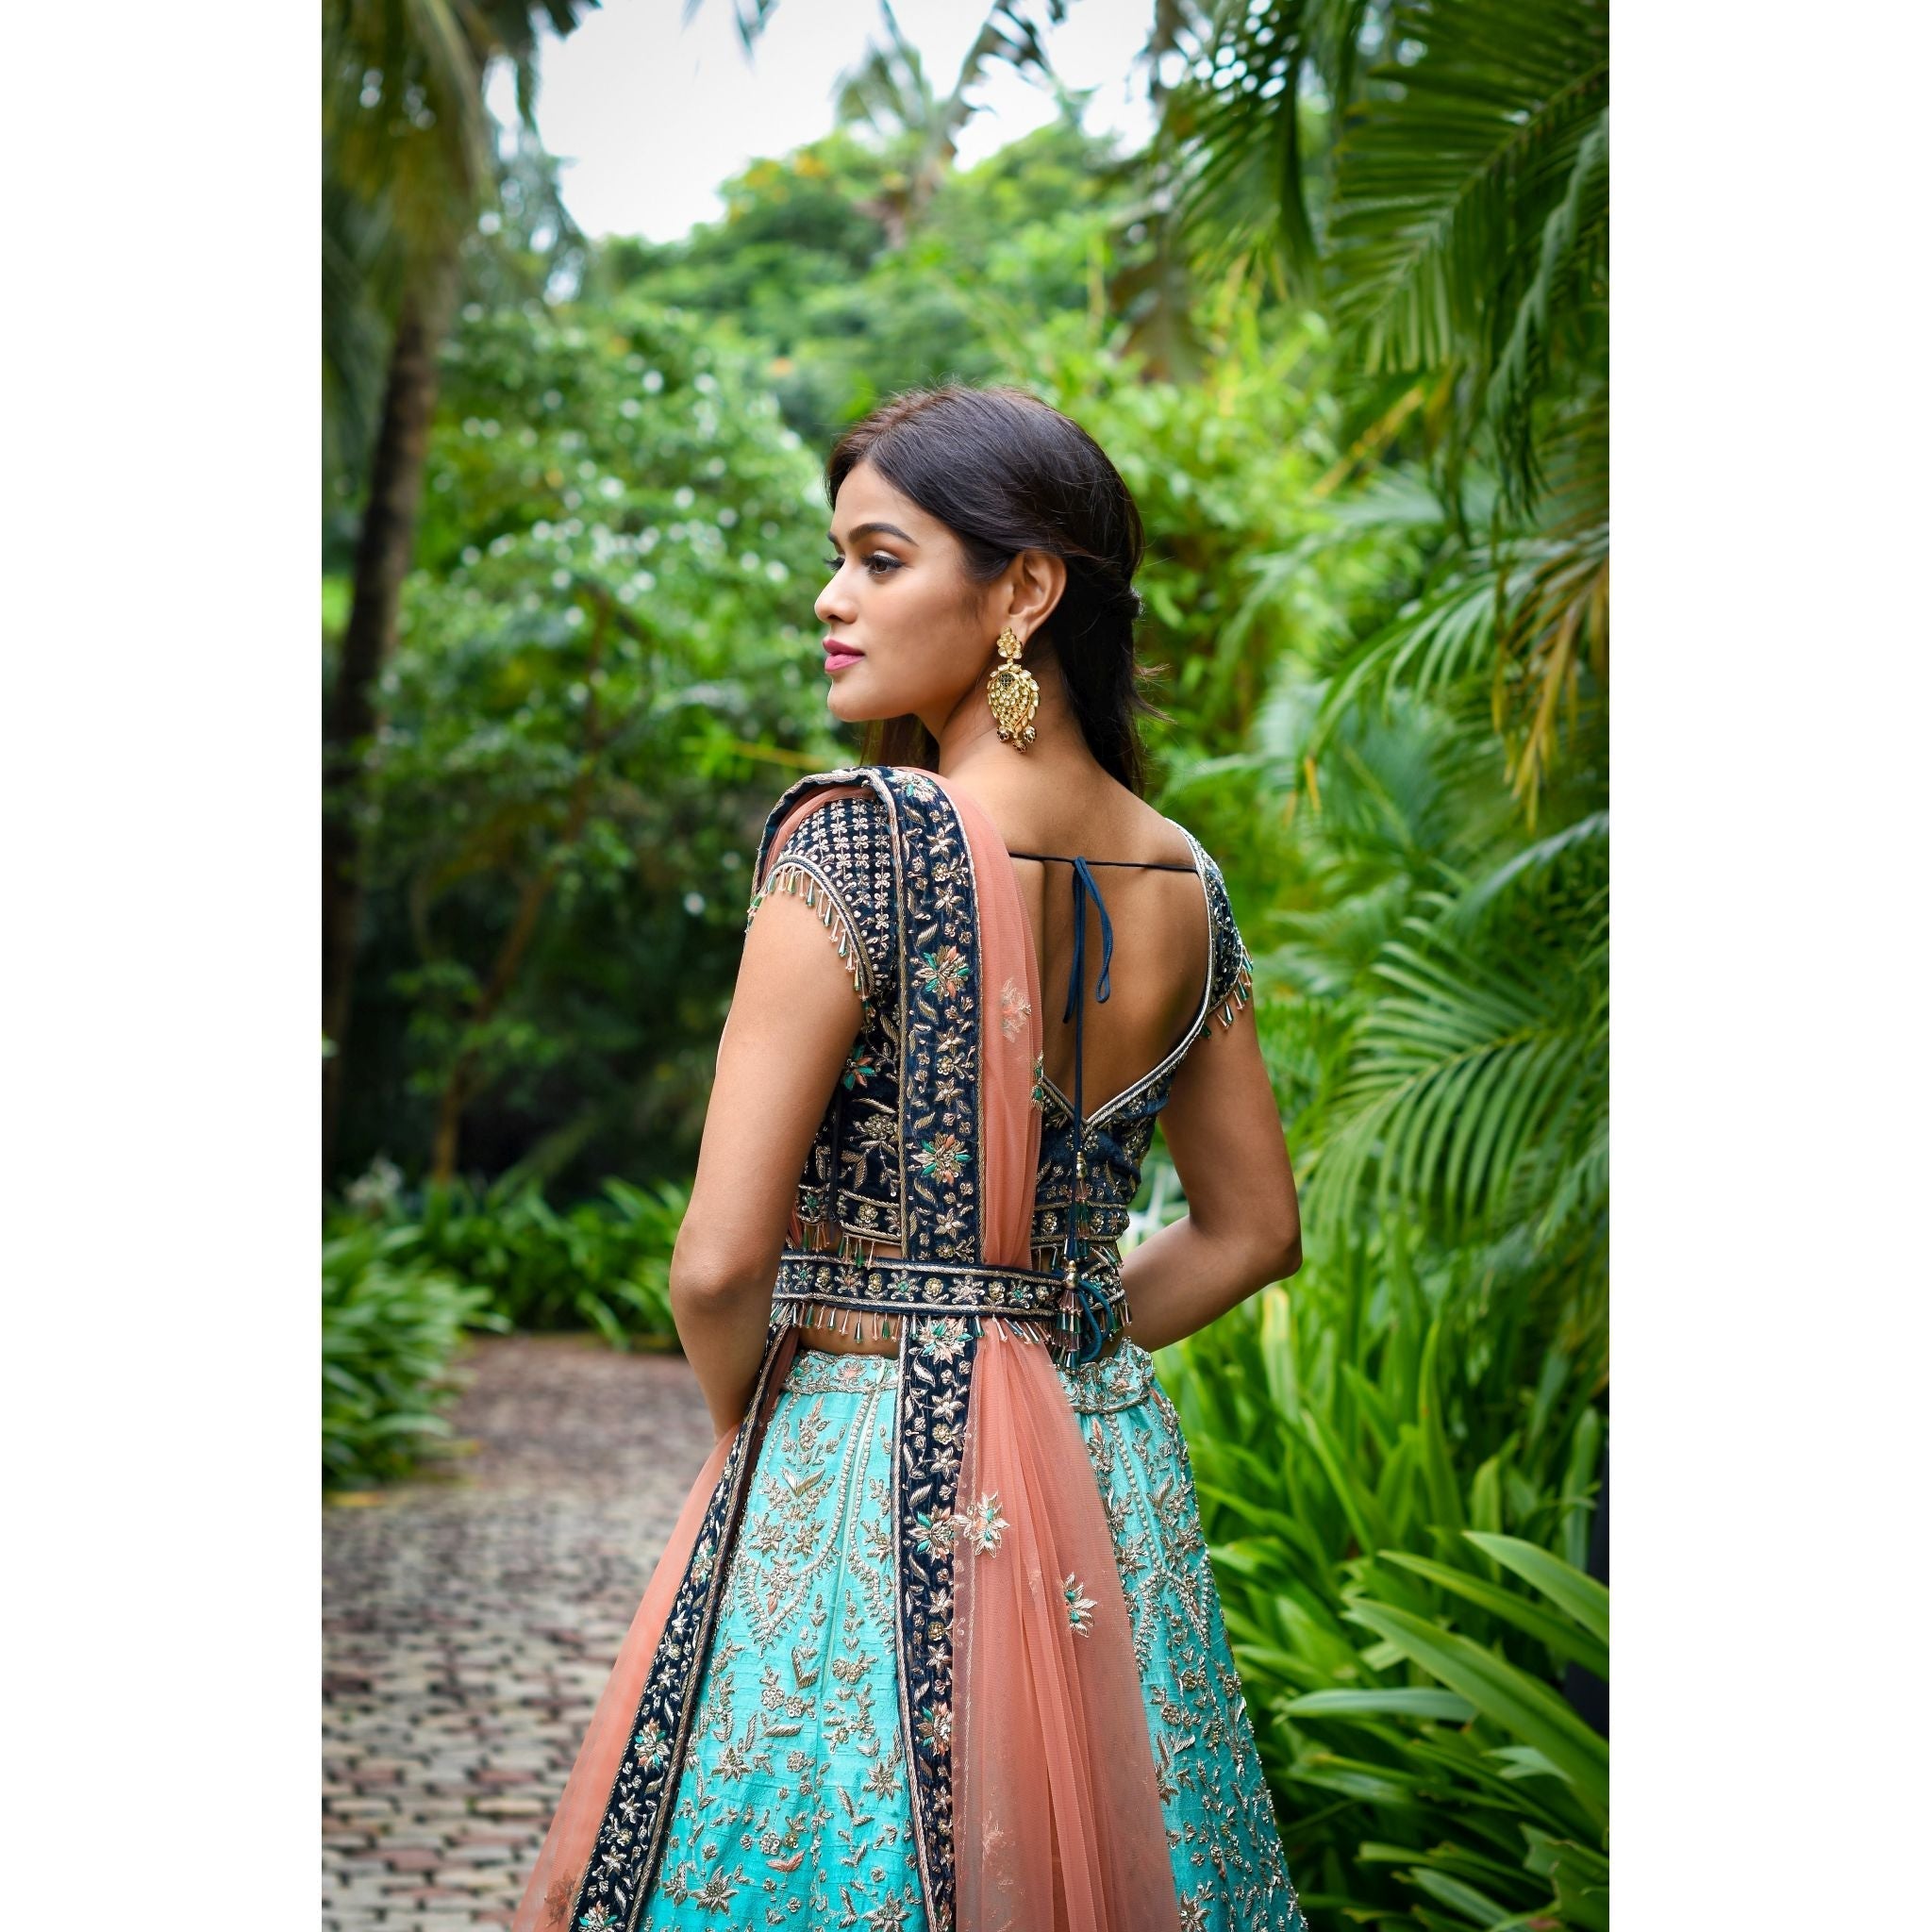 Turquoise Teal Archaic Lehenga Set - Indian Designer Bridal Wedding Outfit